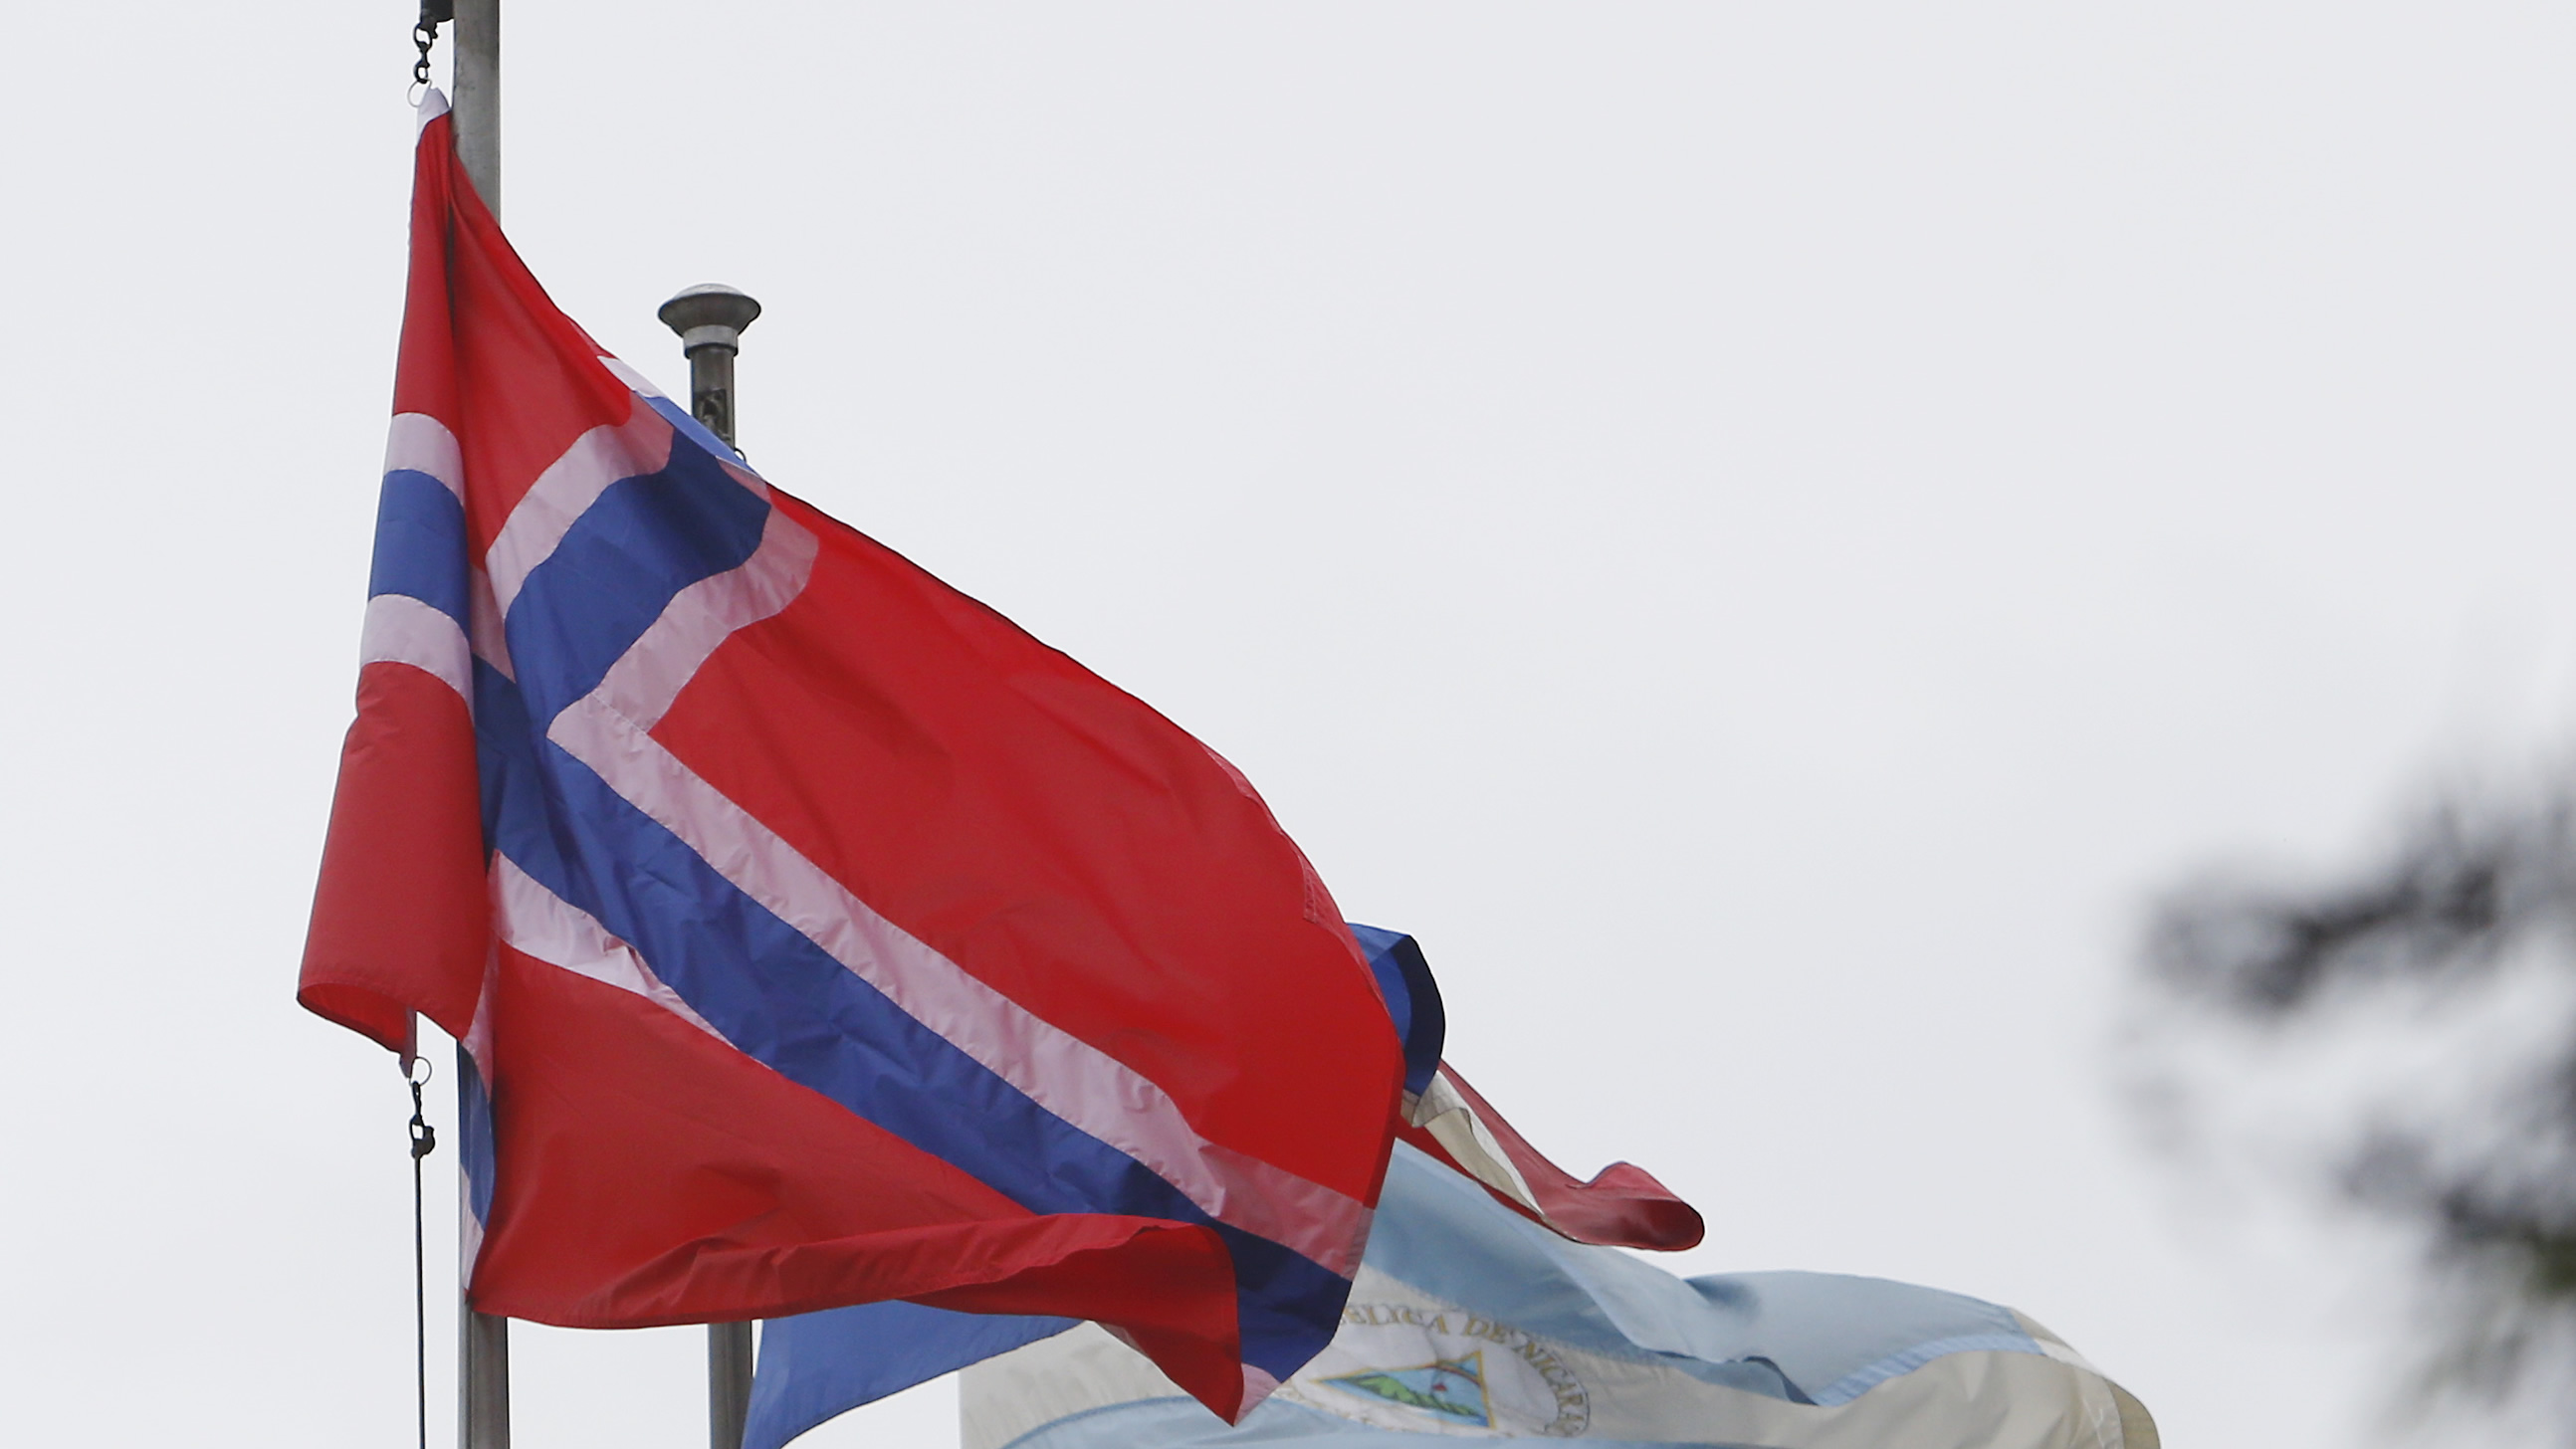 Norway's flag fliying at ECLAC